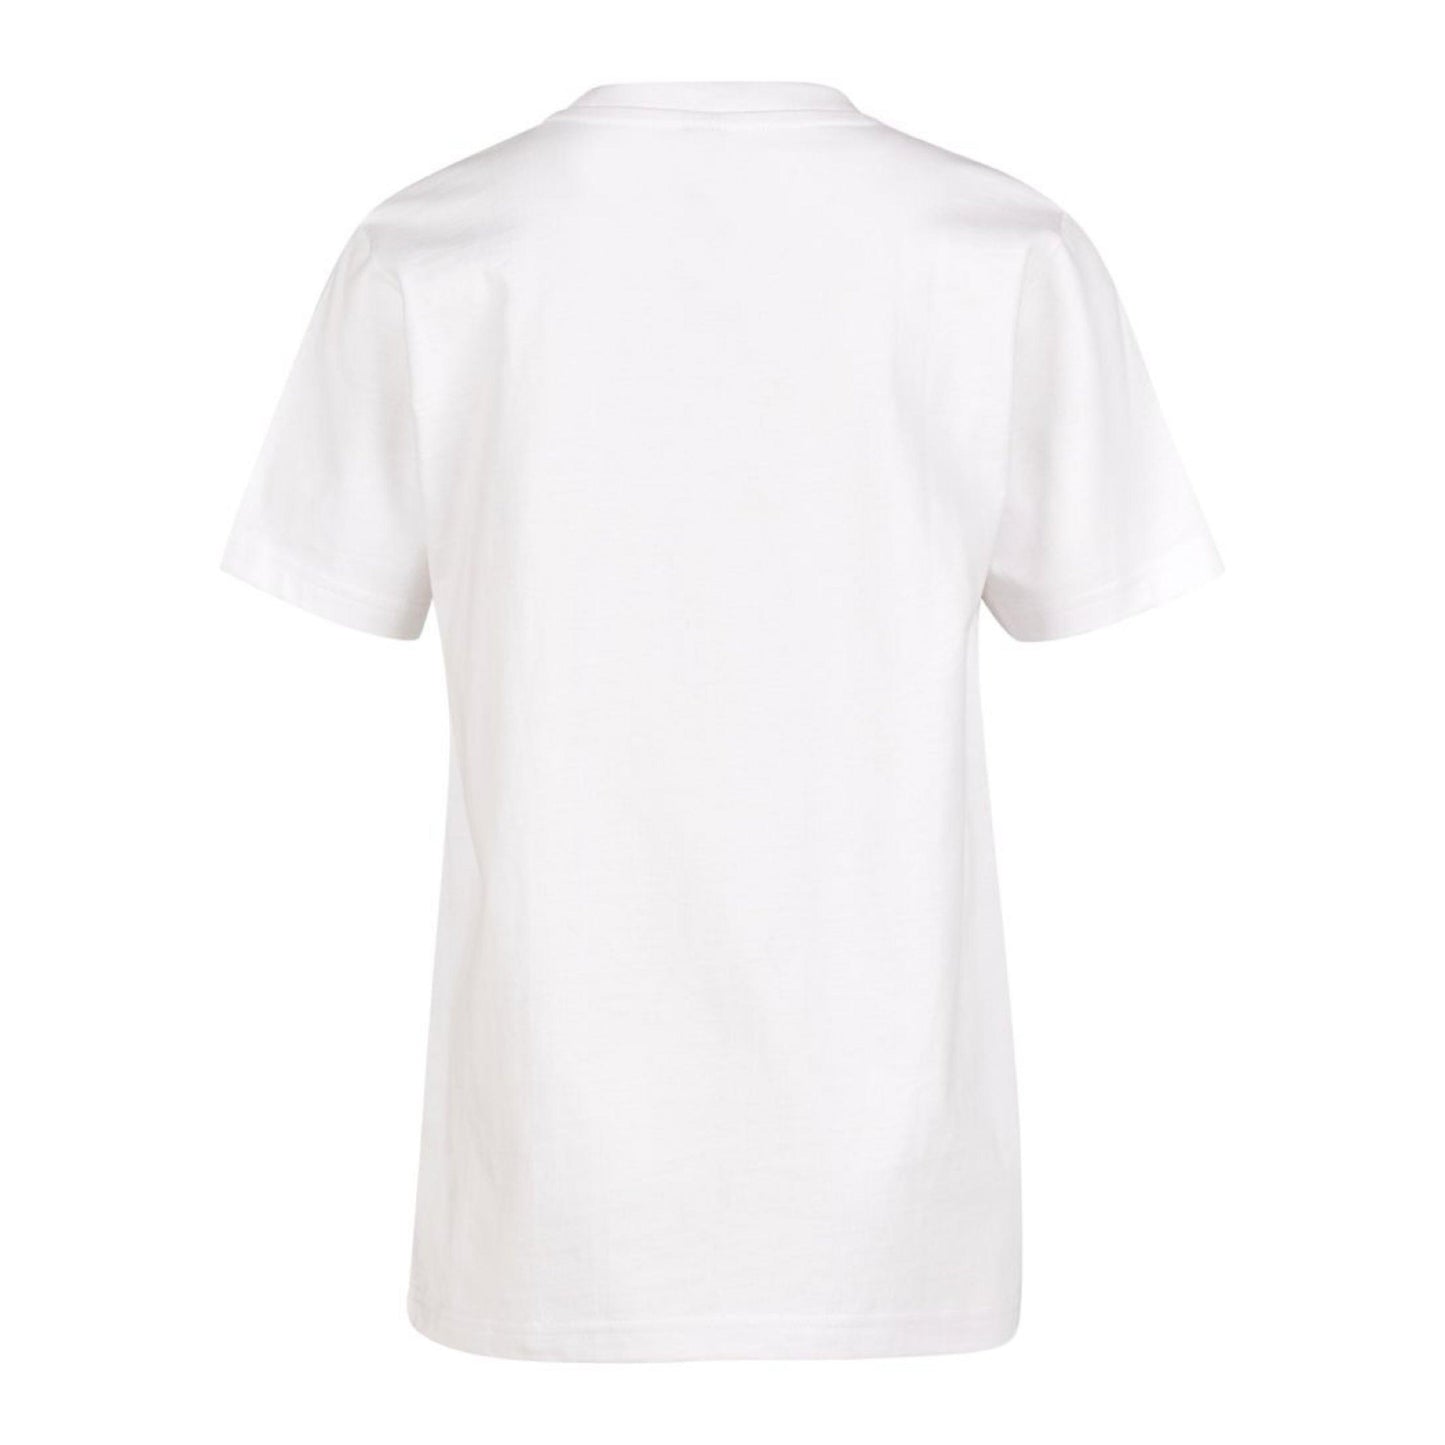 Kids Shirt White/Black 160 g/m² - DMANERA Atelier